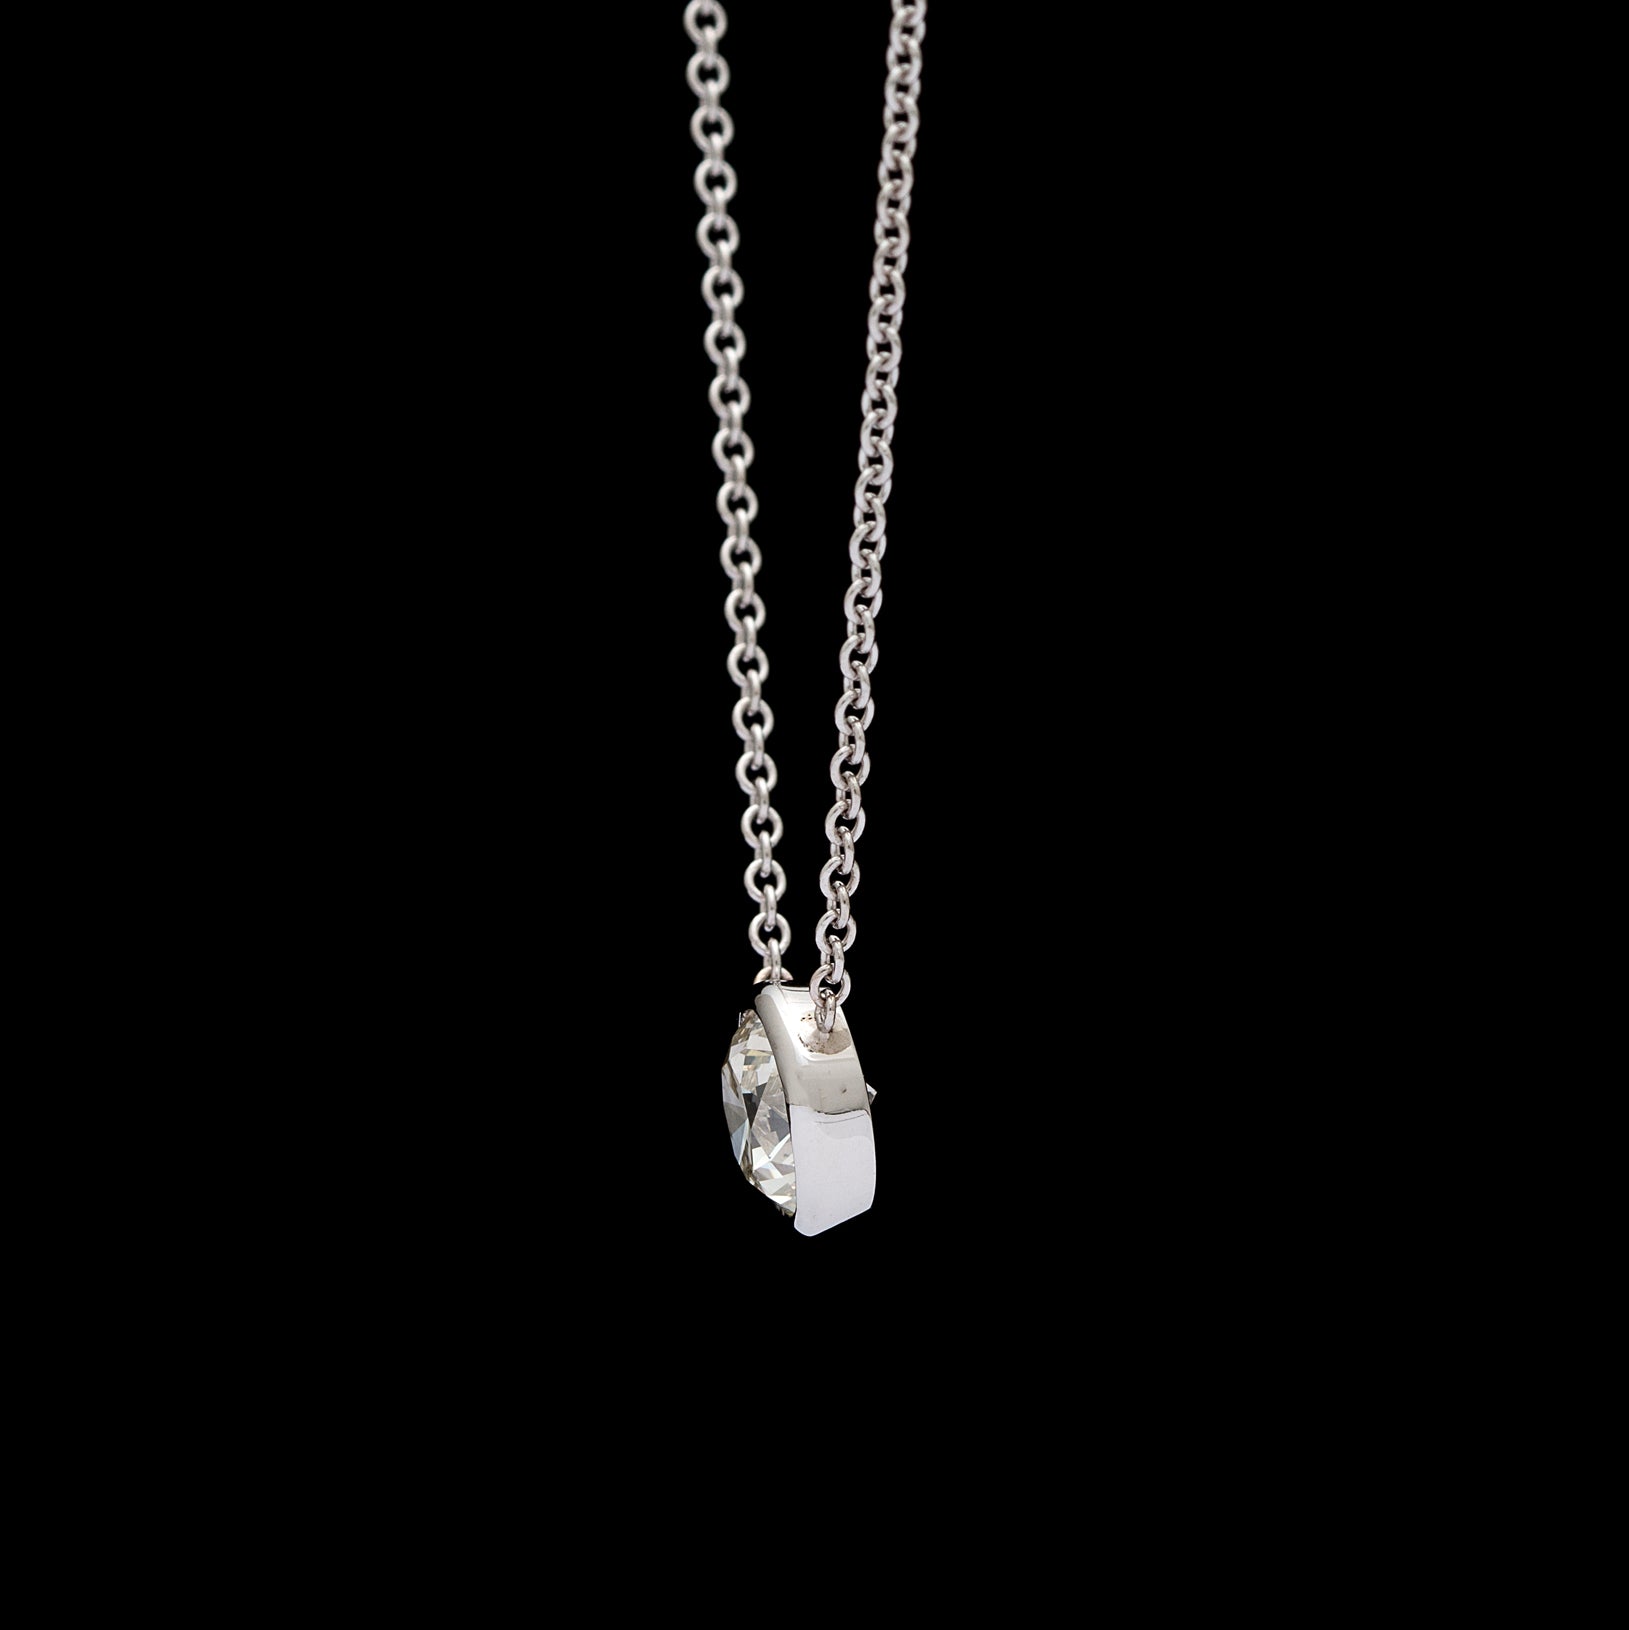 Empreinte pendant, white gold and diamonds - Categories Q93127